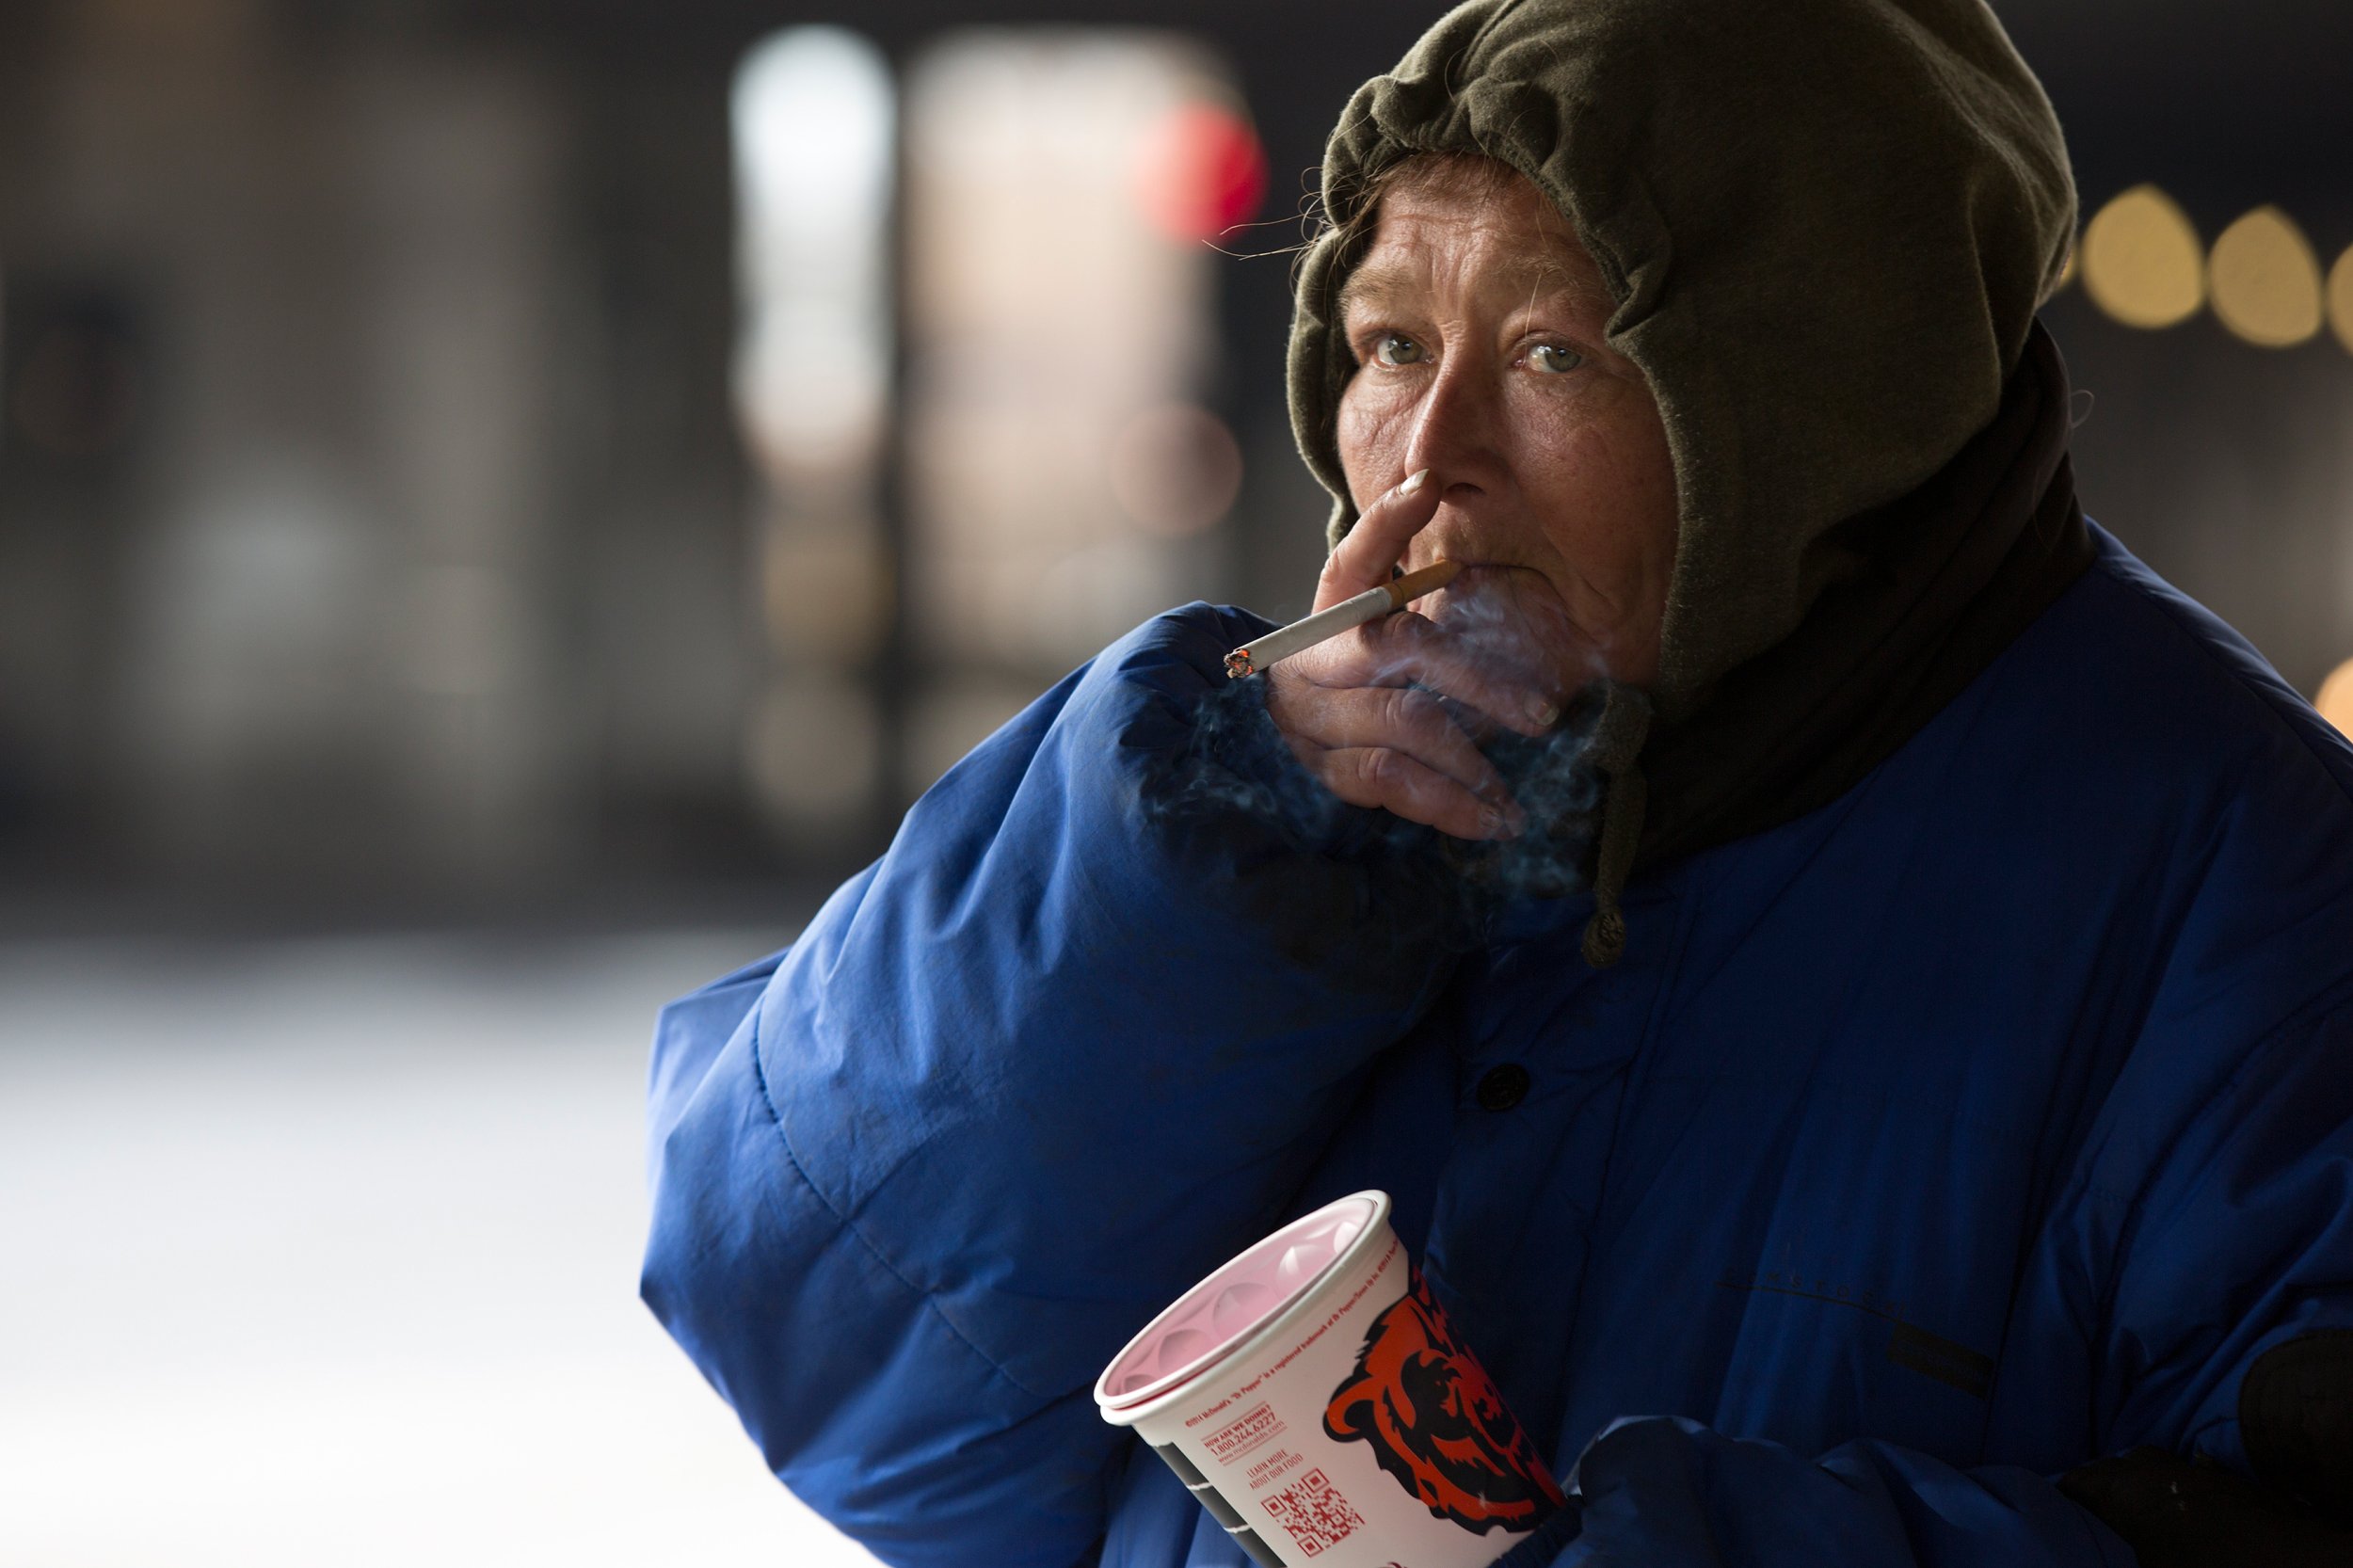 How Much Do Panhandlers Make? New York City Homeless Man Earns 200 An Hour Sitting On Sidewalk